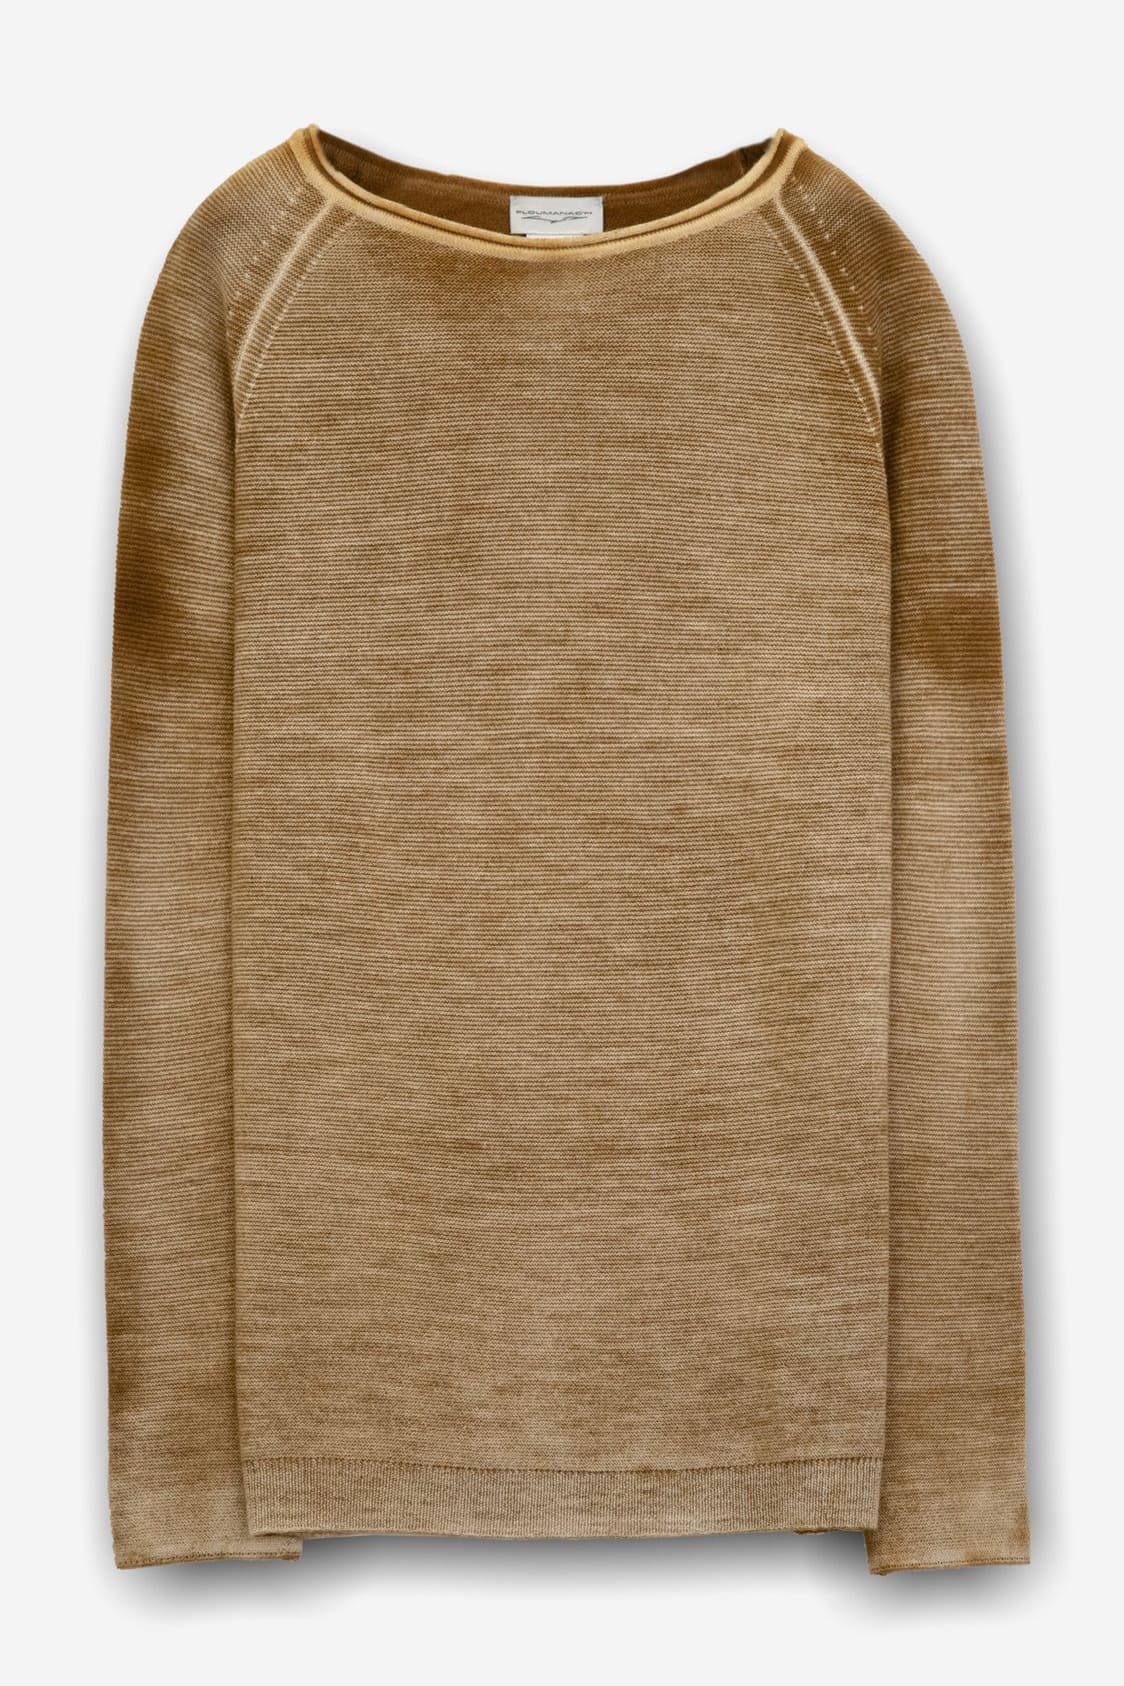 Errol Wood - Sweaters